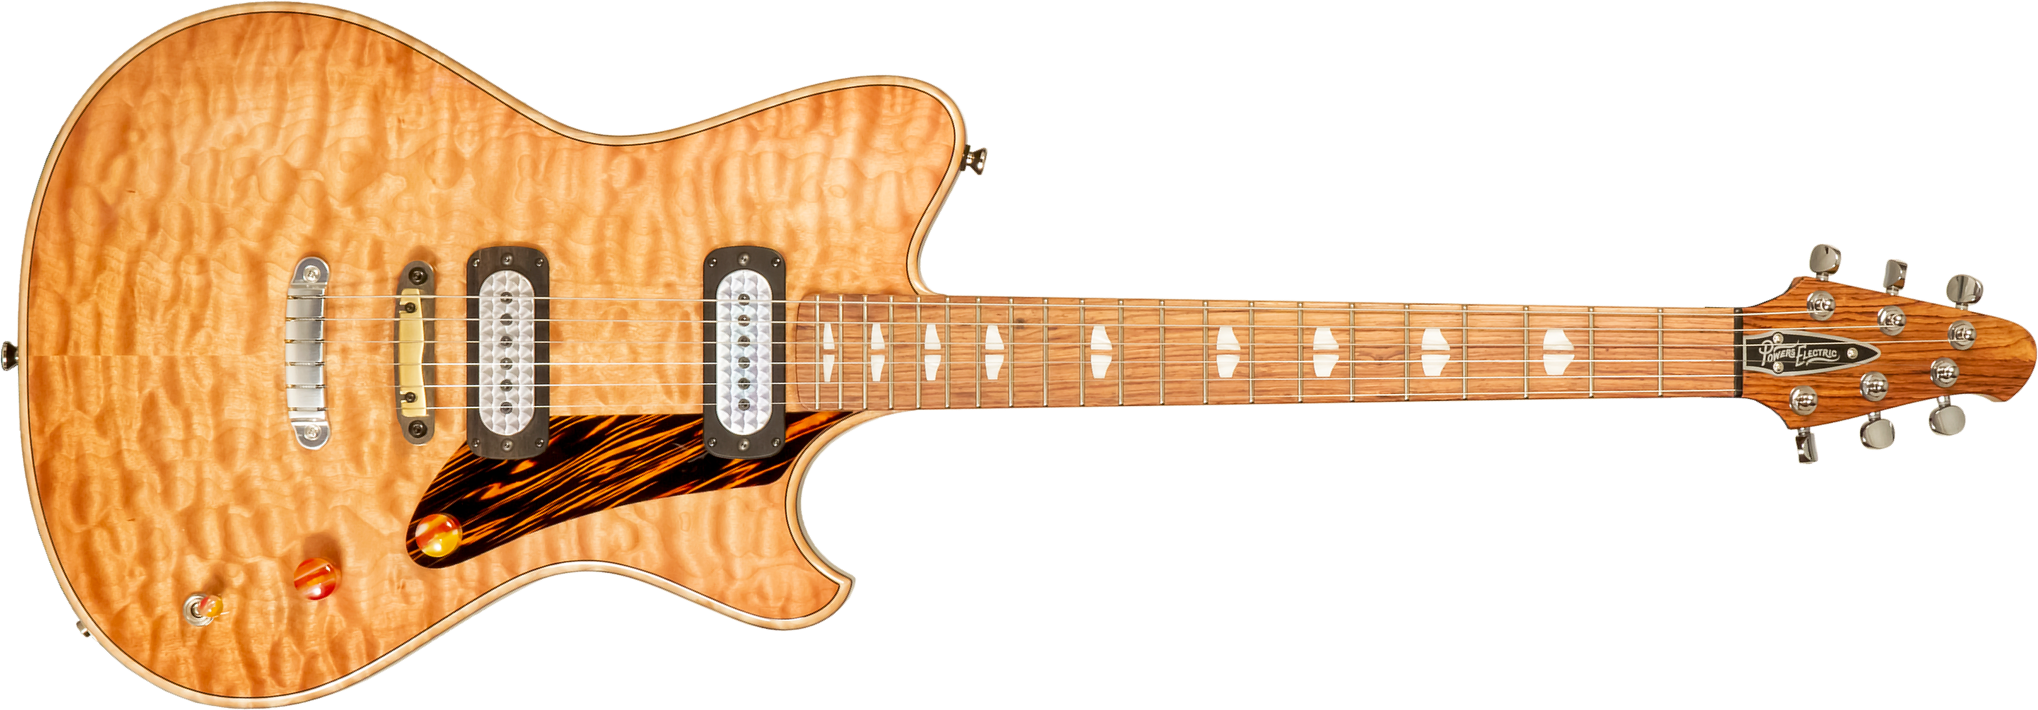 Powers Electric A-type 2s Ff42 Ht Mn #a504 - Pale Ale - Retro-rock elektrische gitaar - Main picture